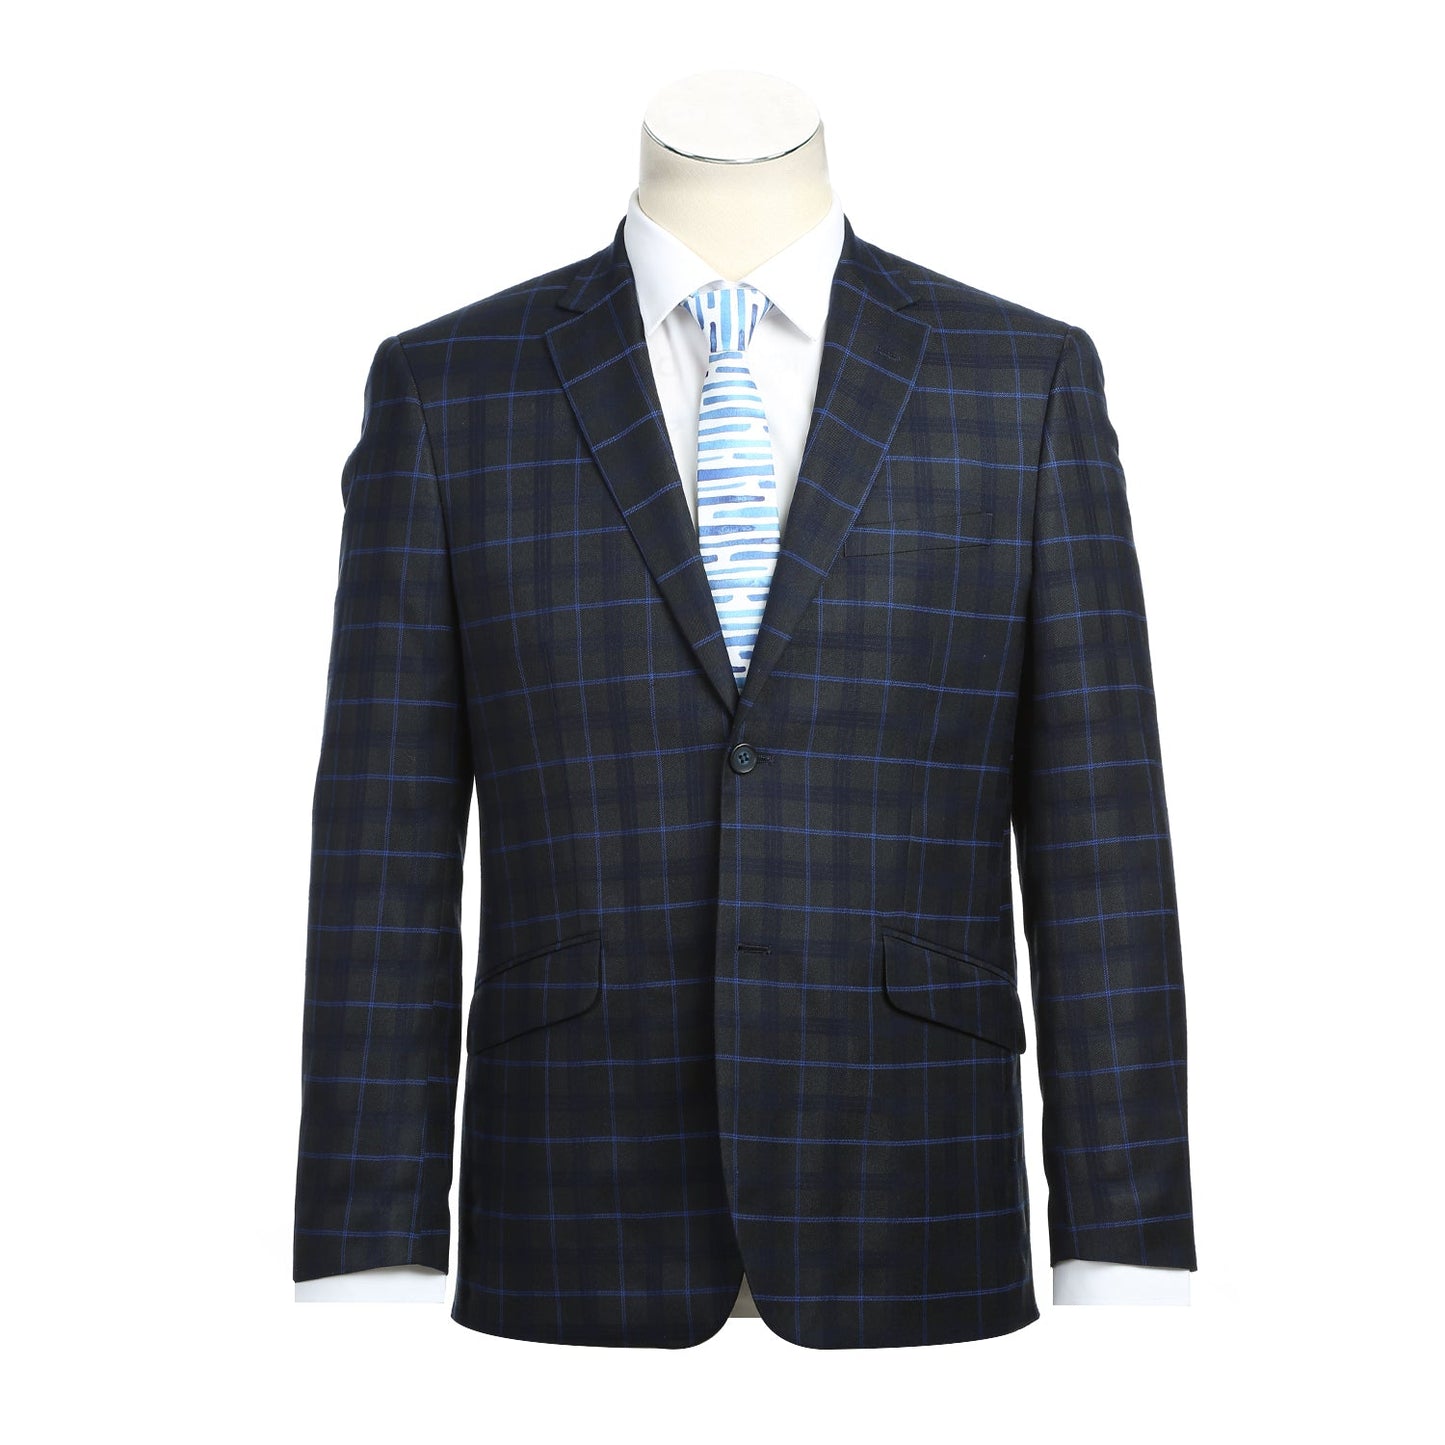 293-27 Men's Classic Fit Navy Windowpane Suit